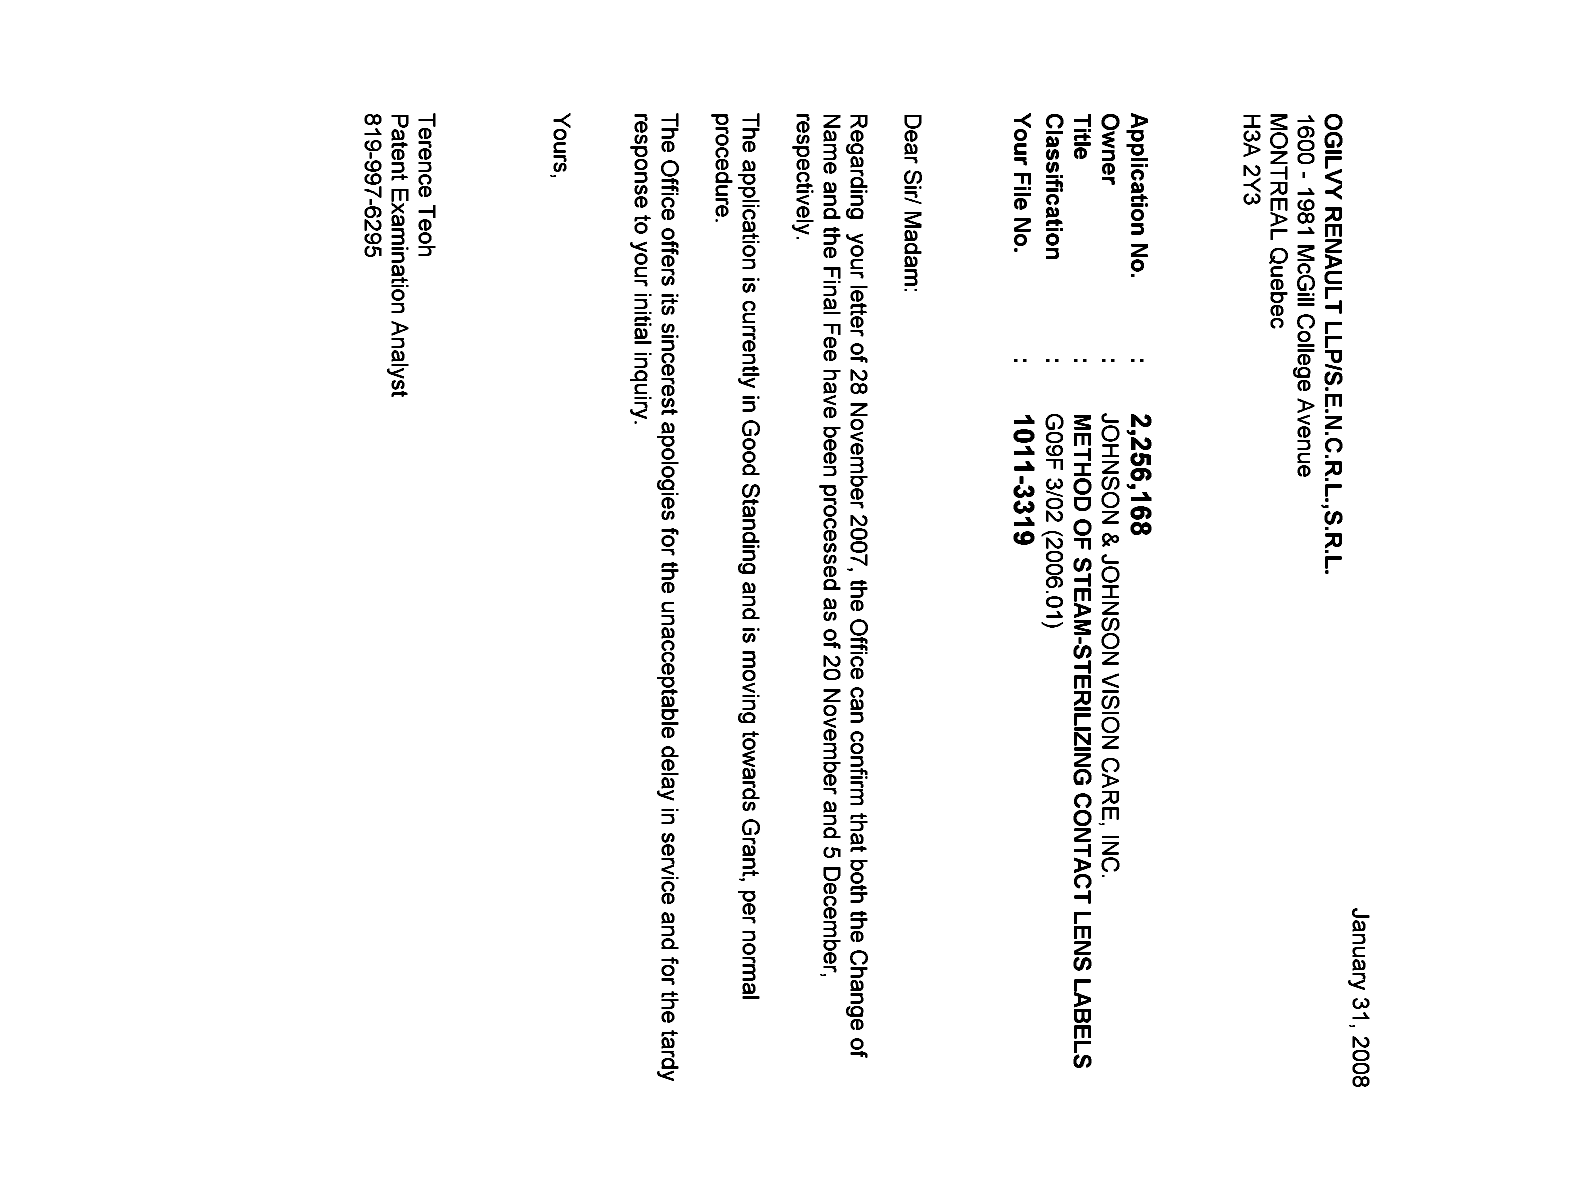 Canadian Patent Document 2256168. Correspondence 20080131. Image 1 of 1